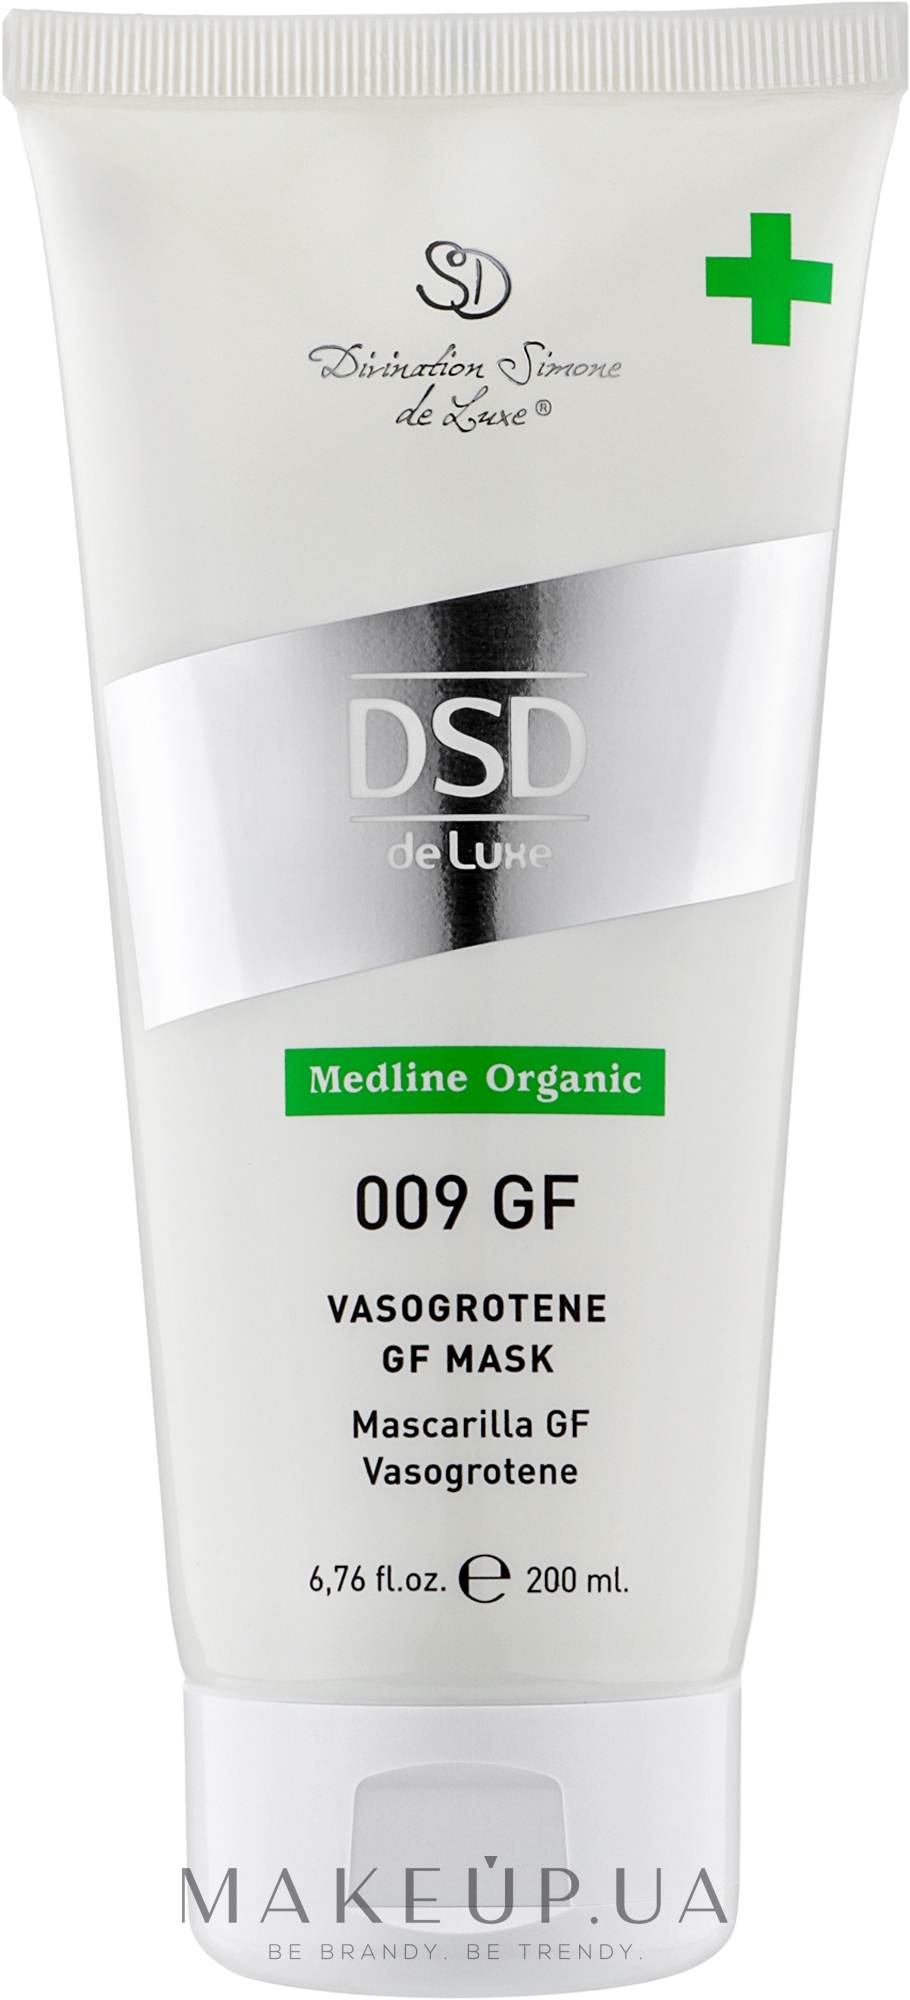 Маска Вазогротен с факторами роста № 009 - Simone DSD de Luxe Medline Organic Vasogrotene Gf Mask — фото 200ml